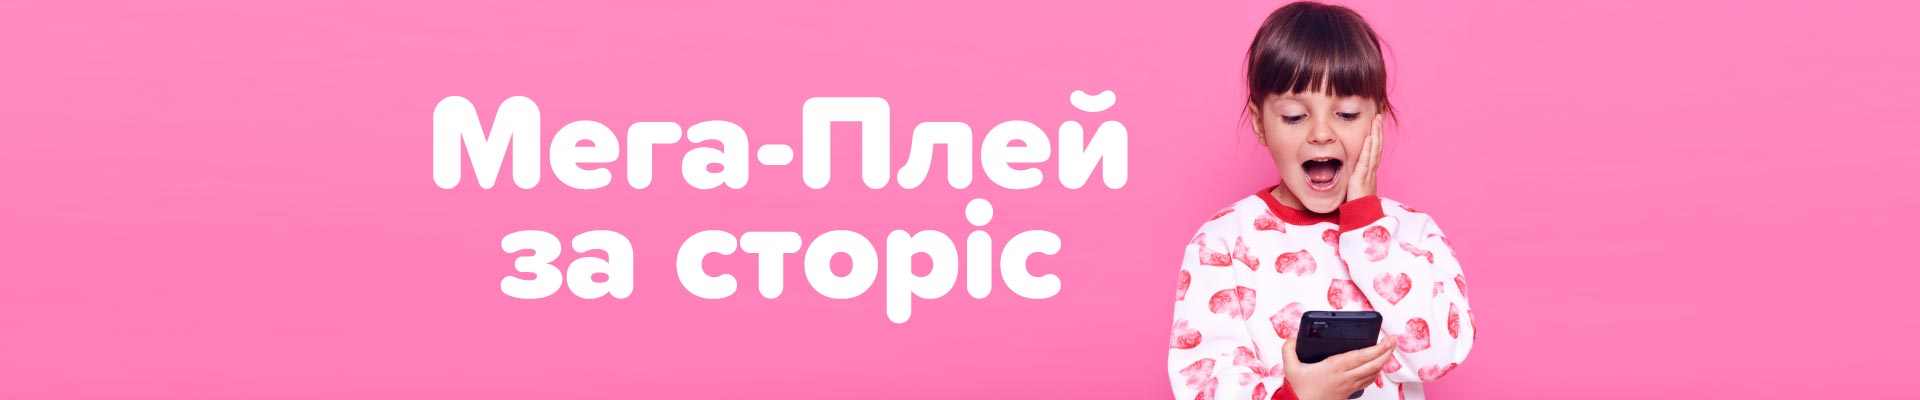 Акция «Мега-Плей за сторис» в Киеве! Игроленд 1